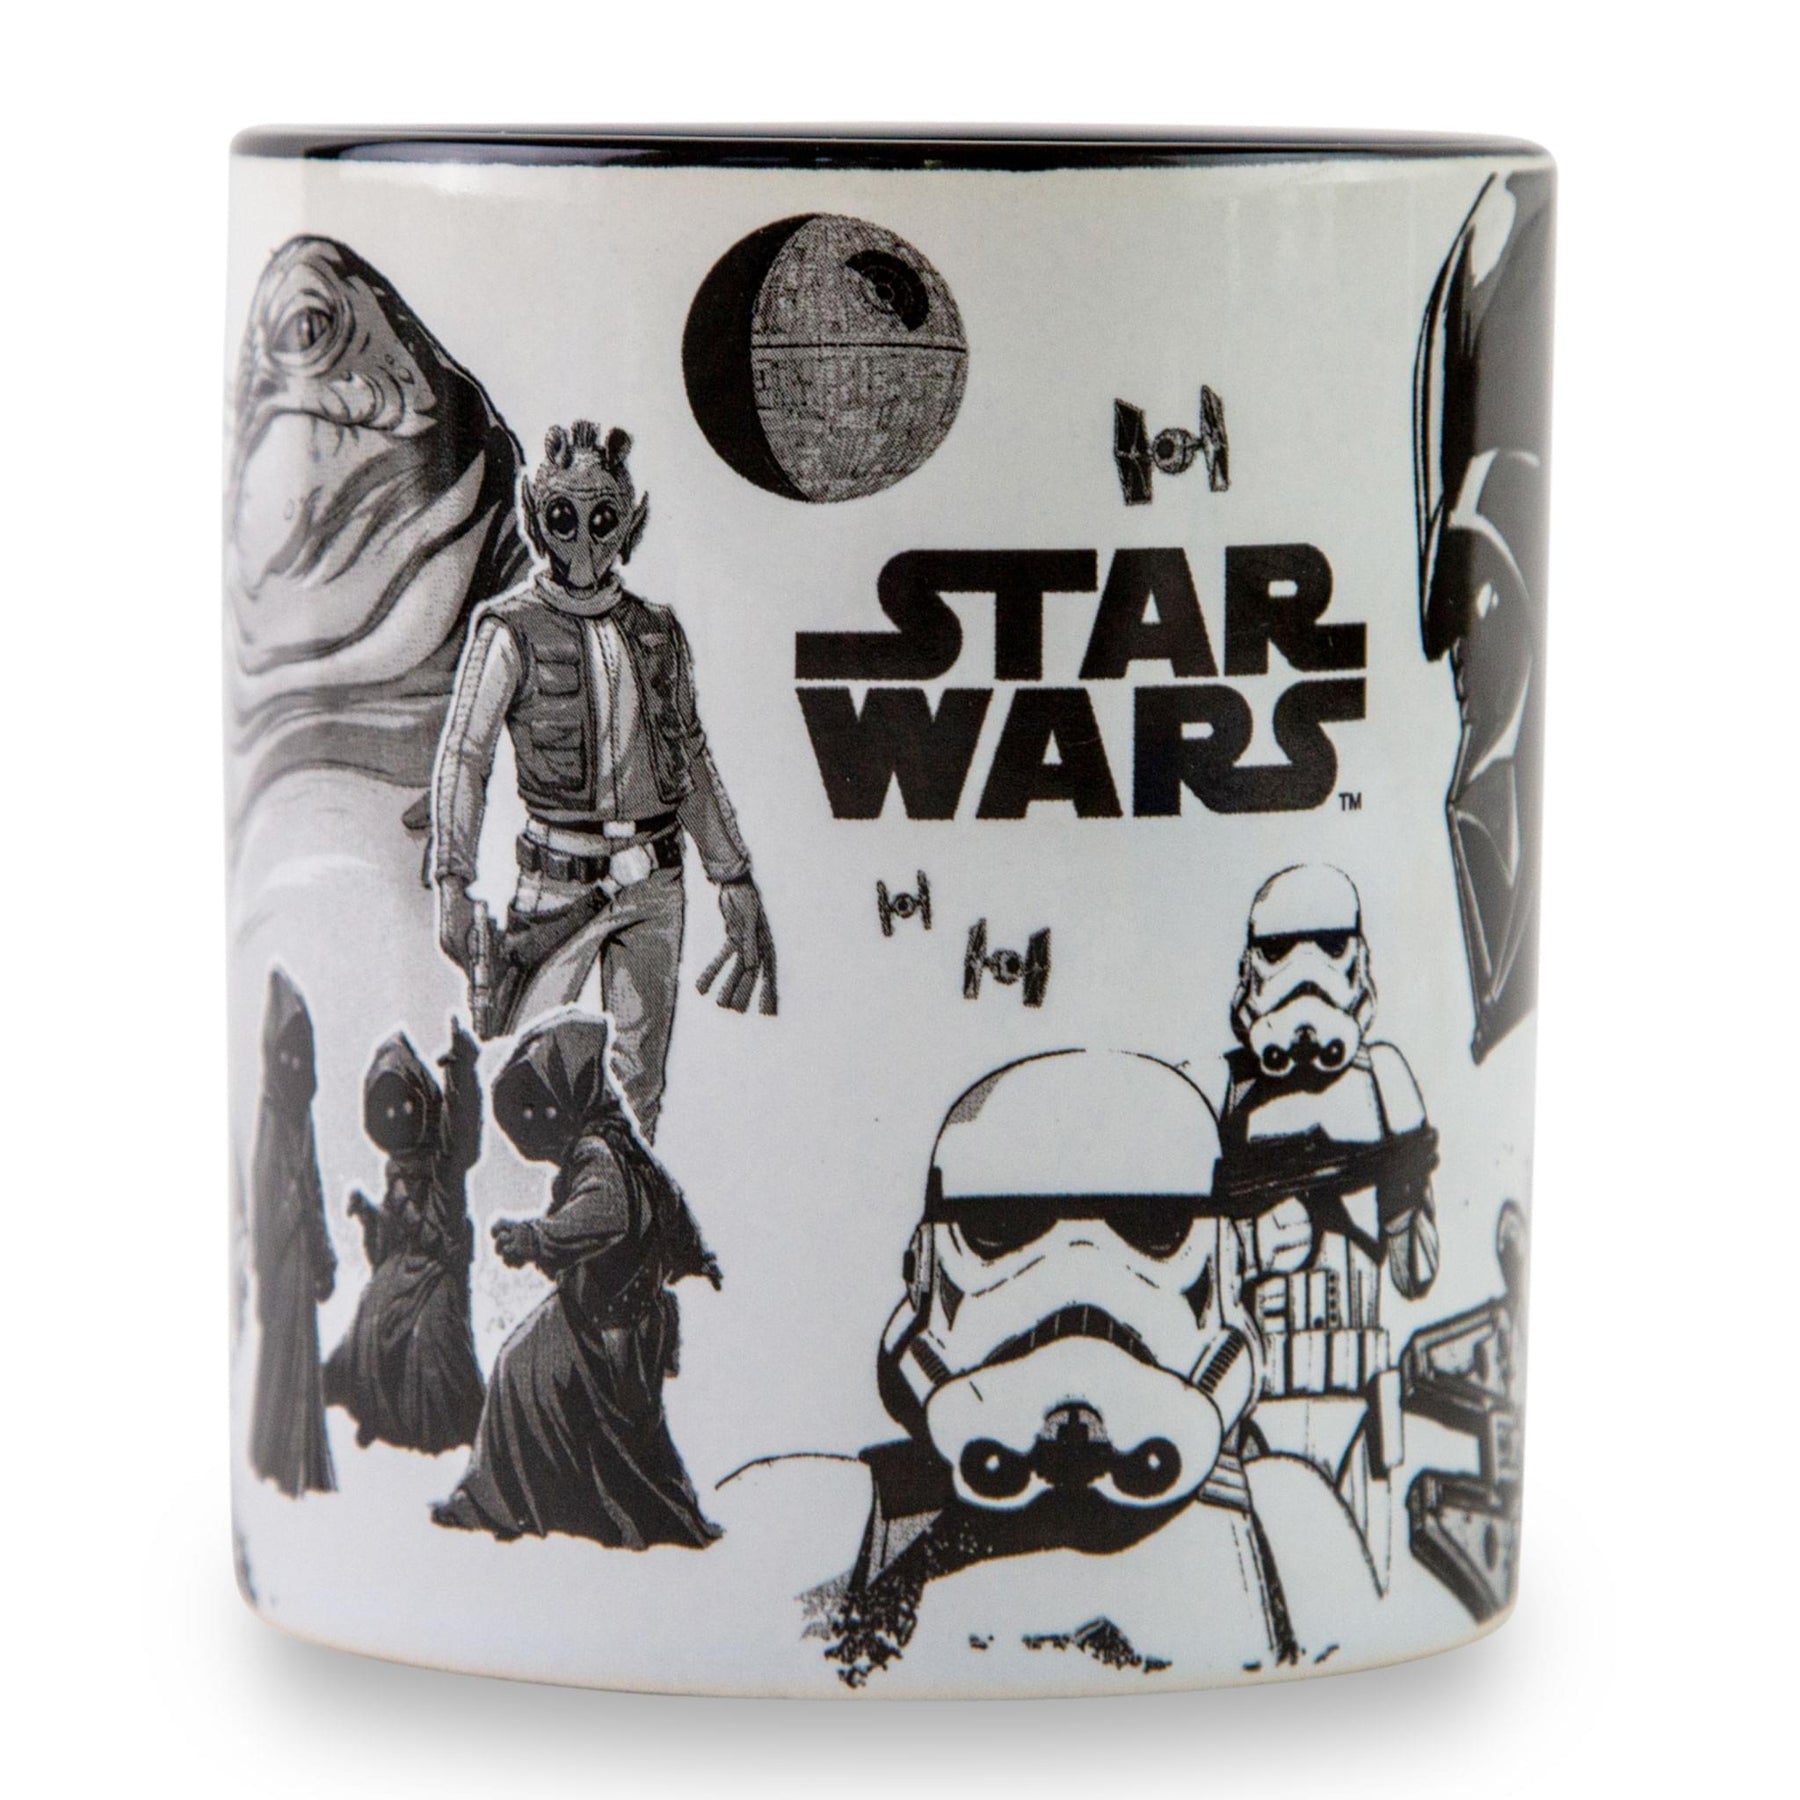 Star Wars Original Trilogy Collage Ceramic Mug | Holds 20 Ounces